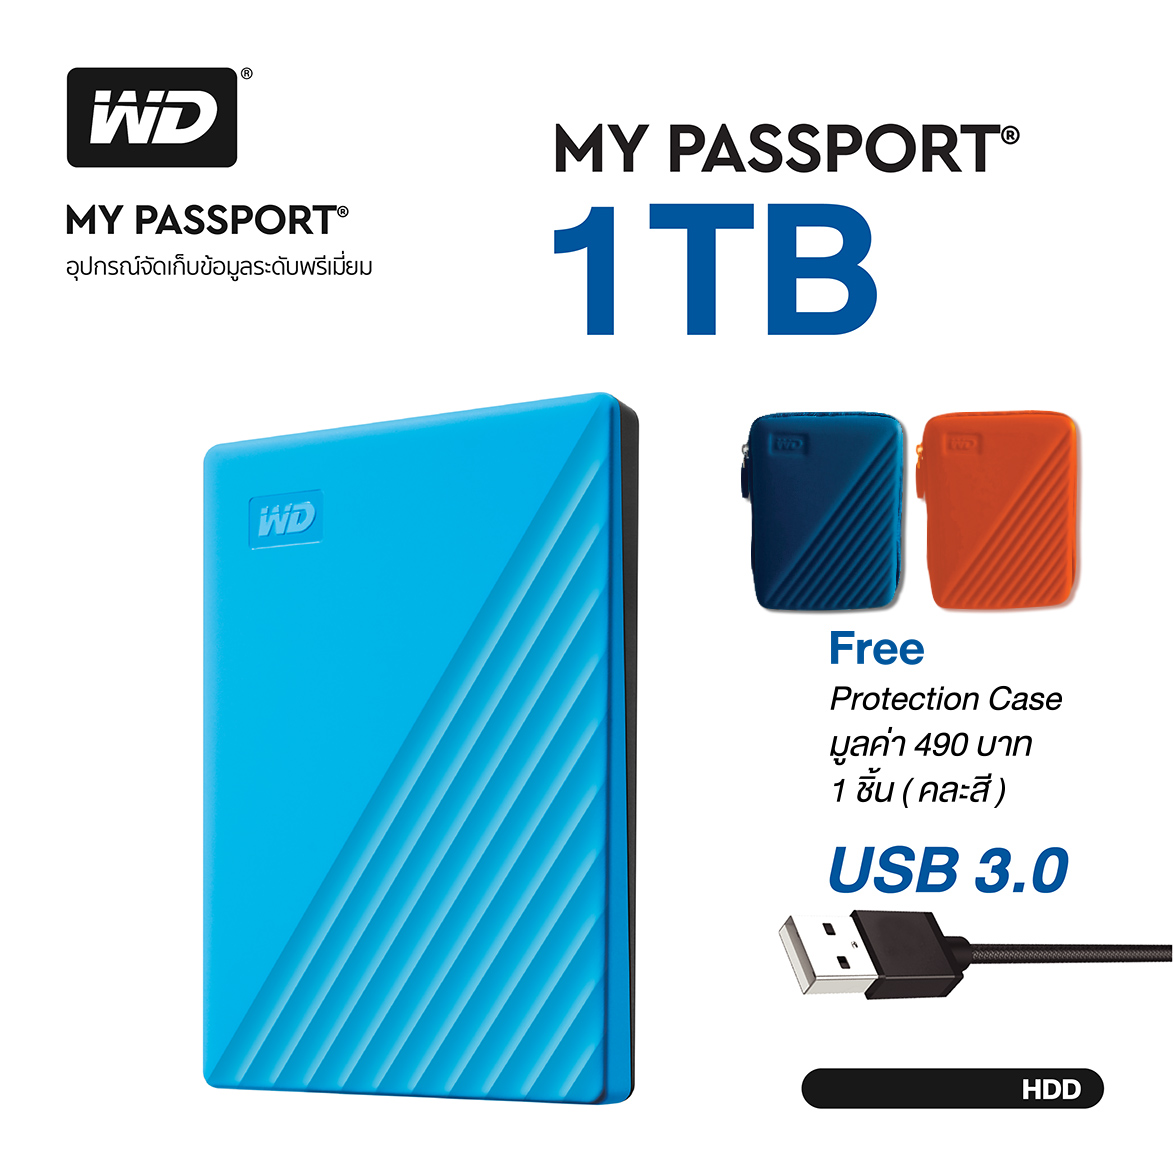 WD My Passport 1TB, Blue ฟรี! กระเป๋ากันกระแทก (คละสี) USB 3.0, HDD 2.5 ( WDBYVG0010BBL-WESN ) ( ฮาร์ดดิสพกพา Internal Harddisk Harddrive )